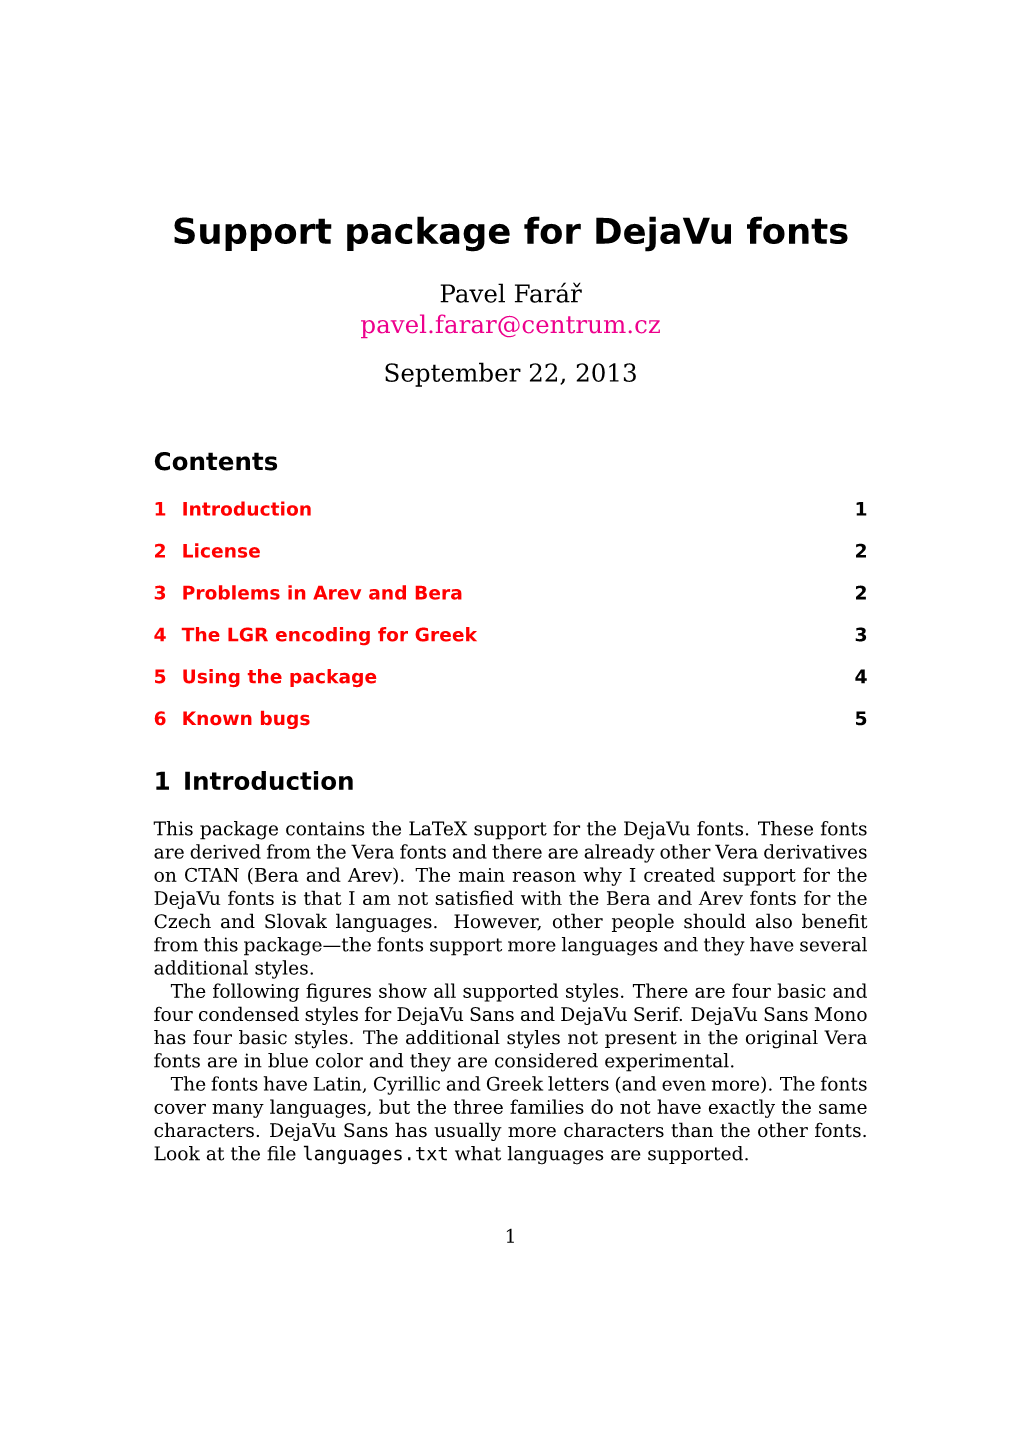 Support Package for Dejavu Fonts